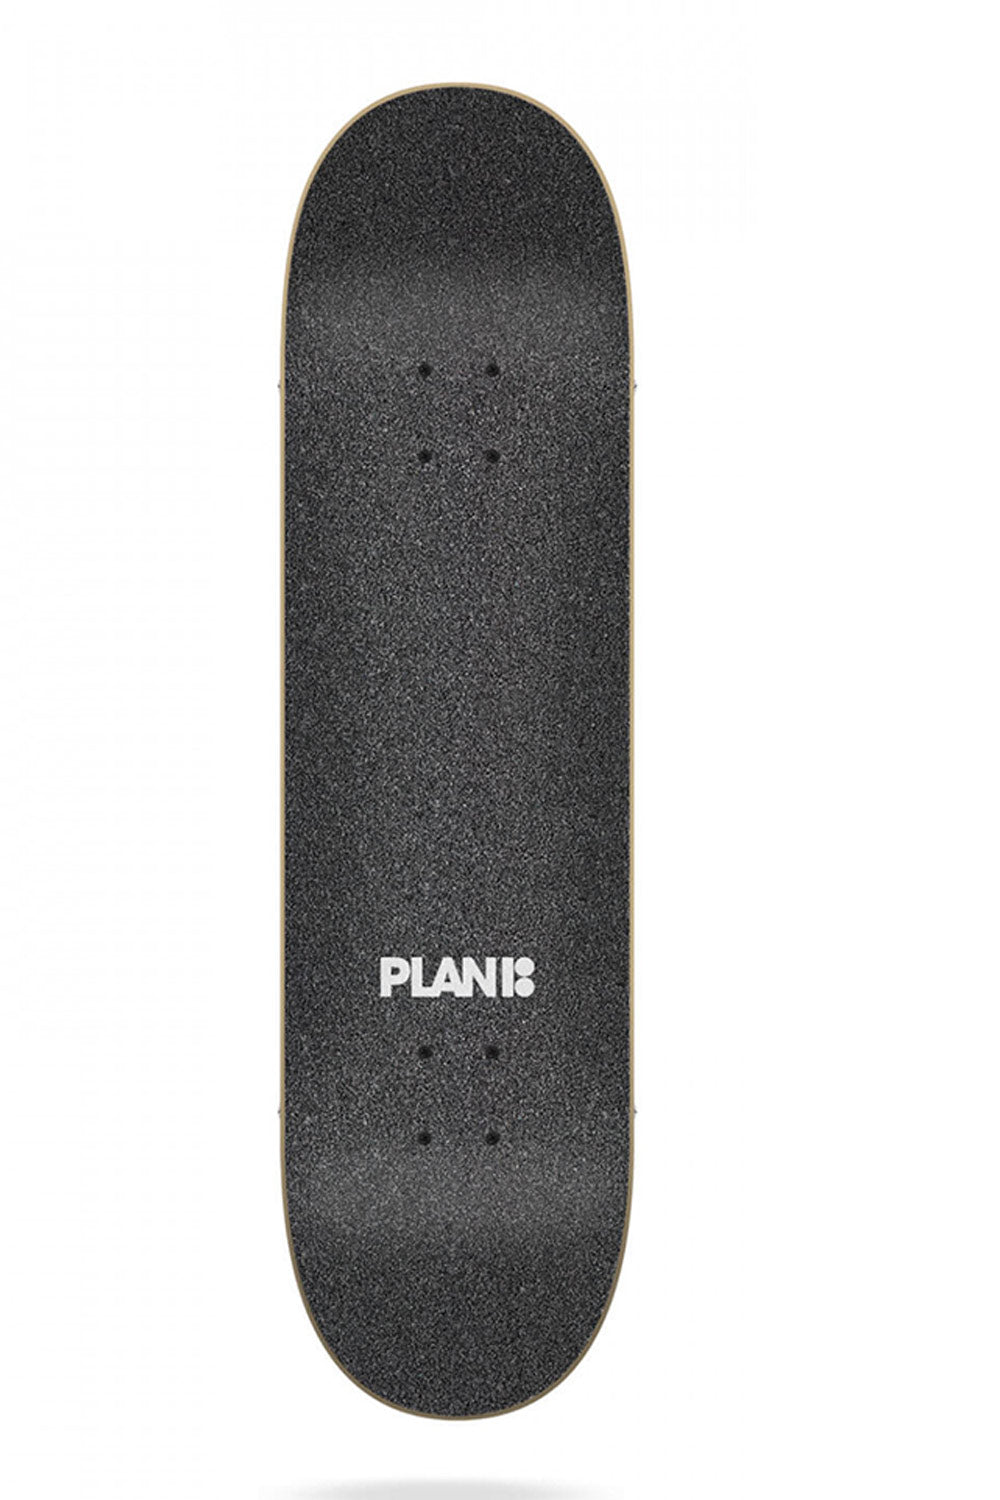 Plan B Sacred G Complete Skateboard